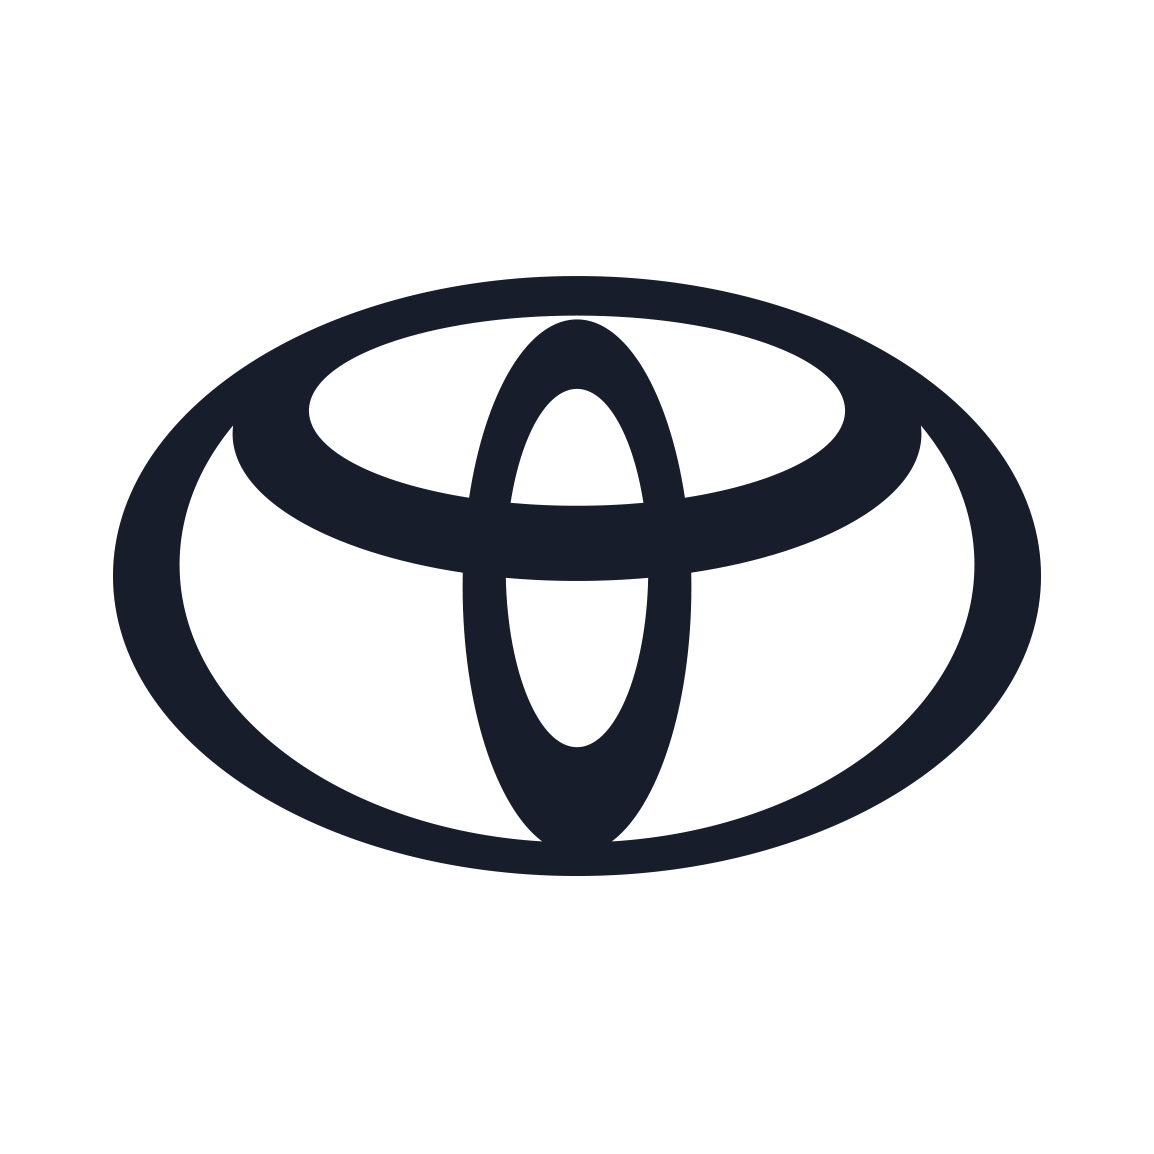 Logo Enel